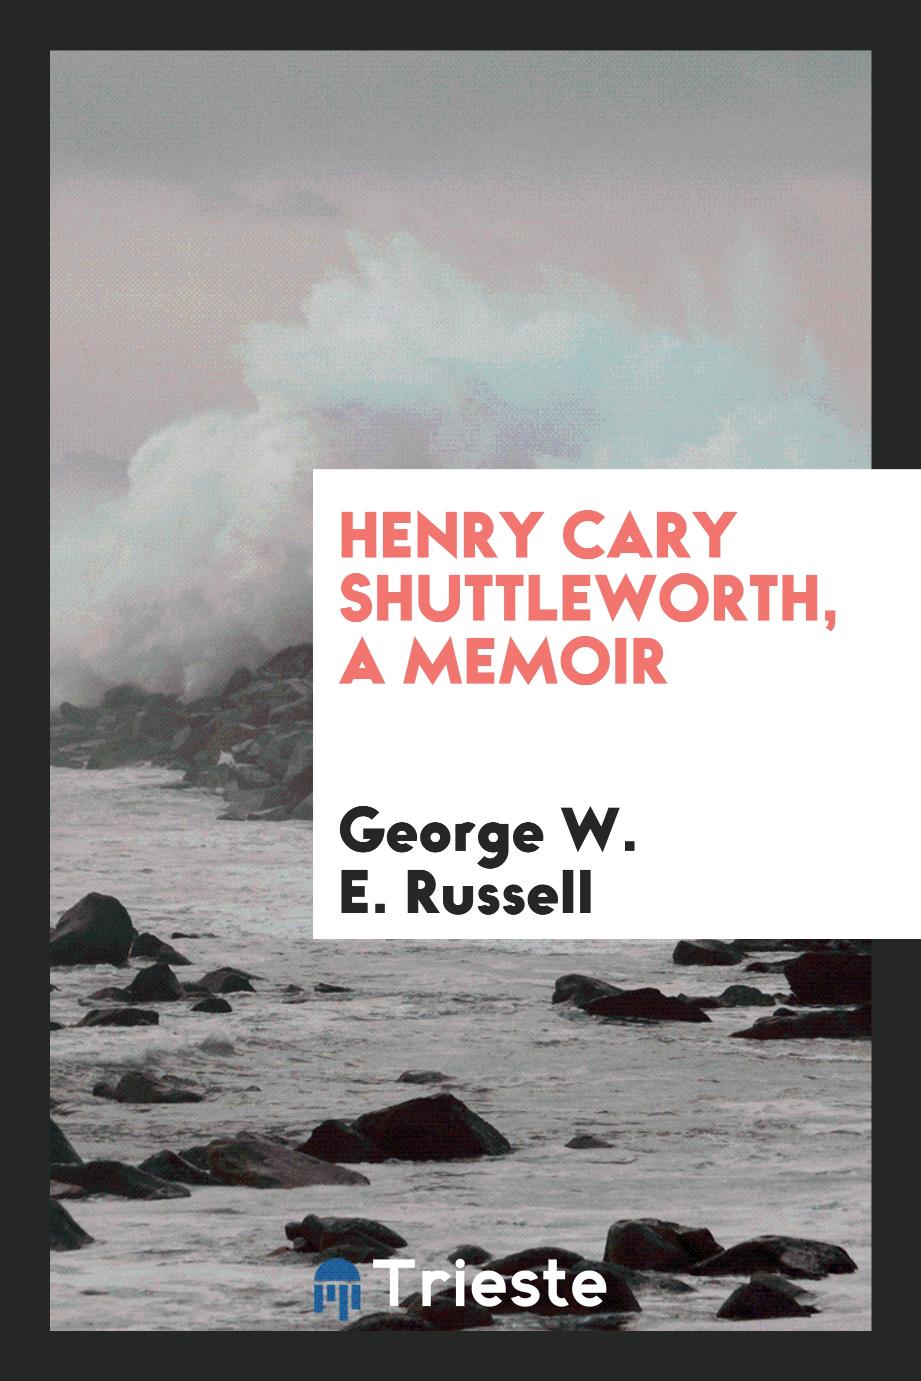 Henry Cary Shuttleworth, a memoir